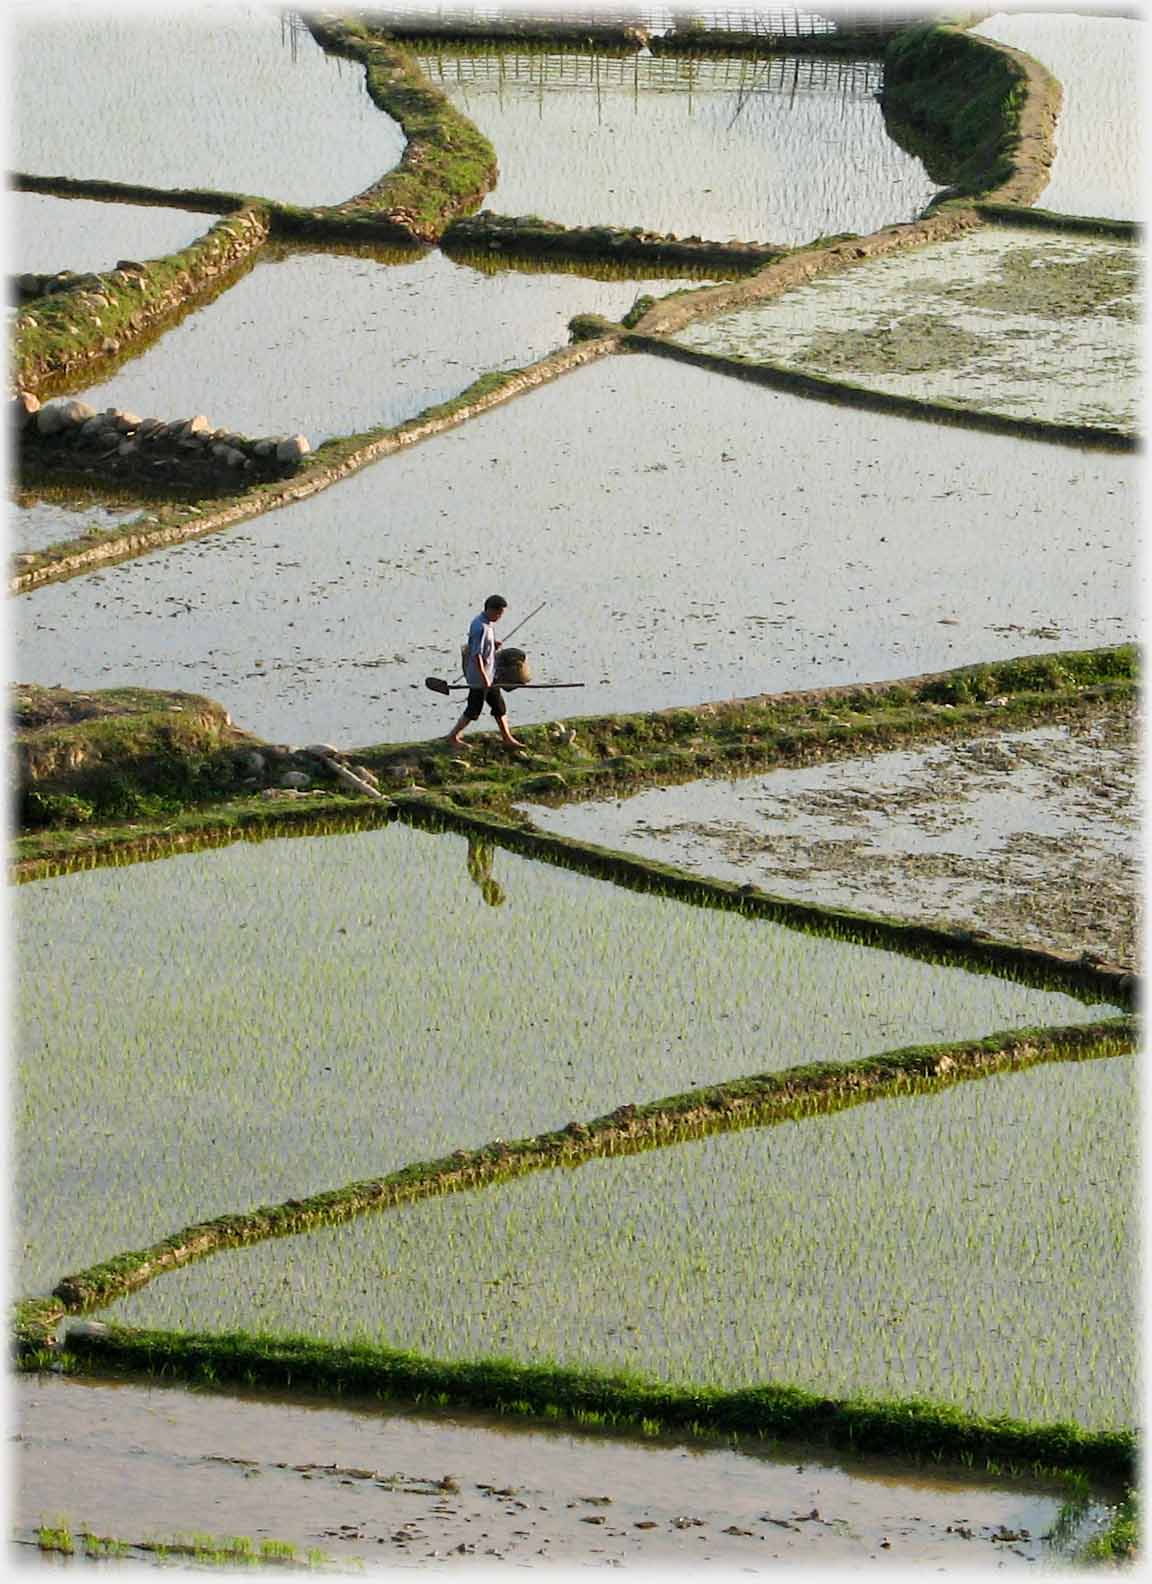 Man walking on dyke with reflection in water filled field.